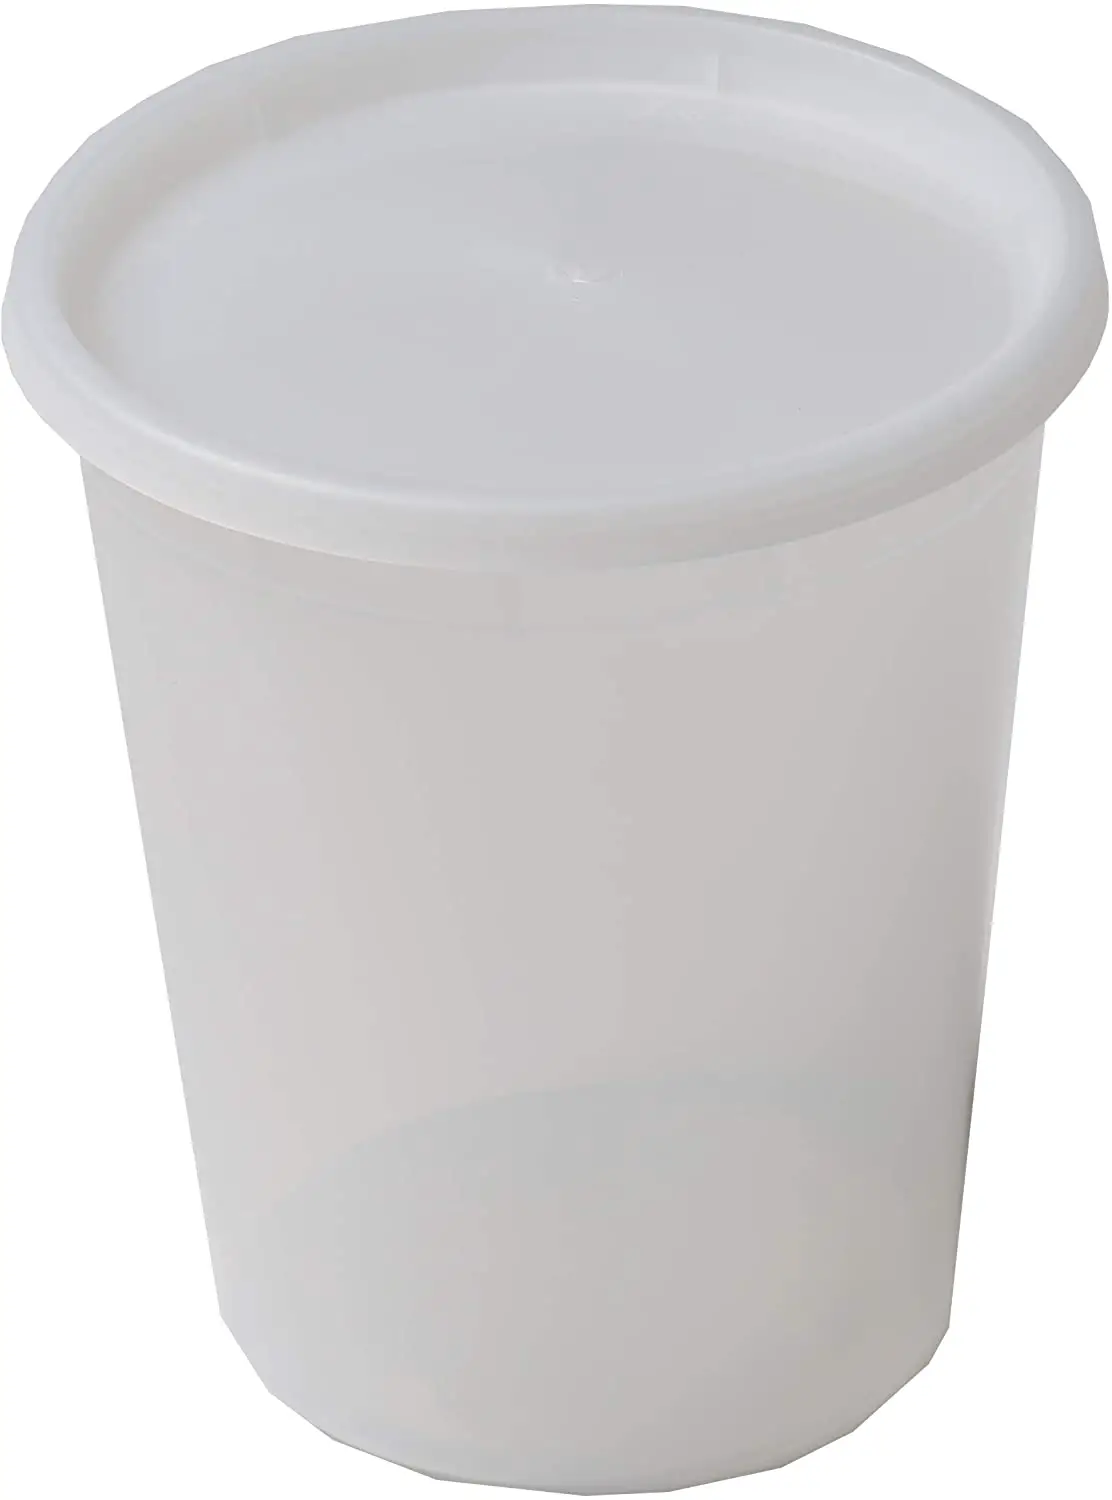 Amazon.com: 32oz plastic soup/Food container with lids ...